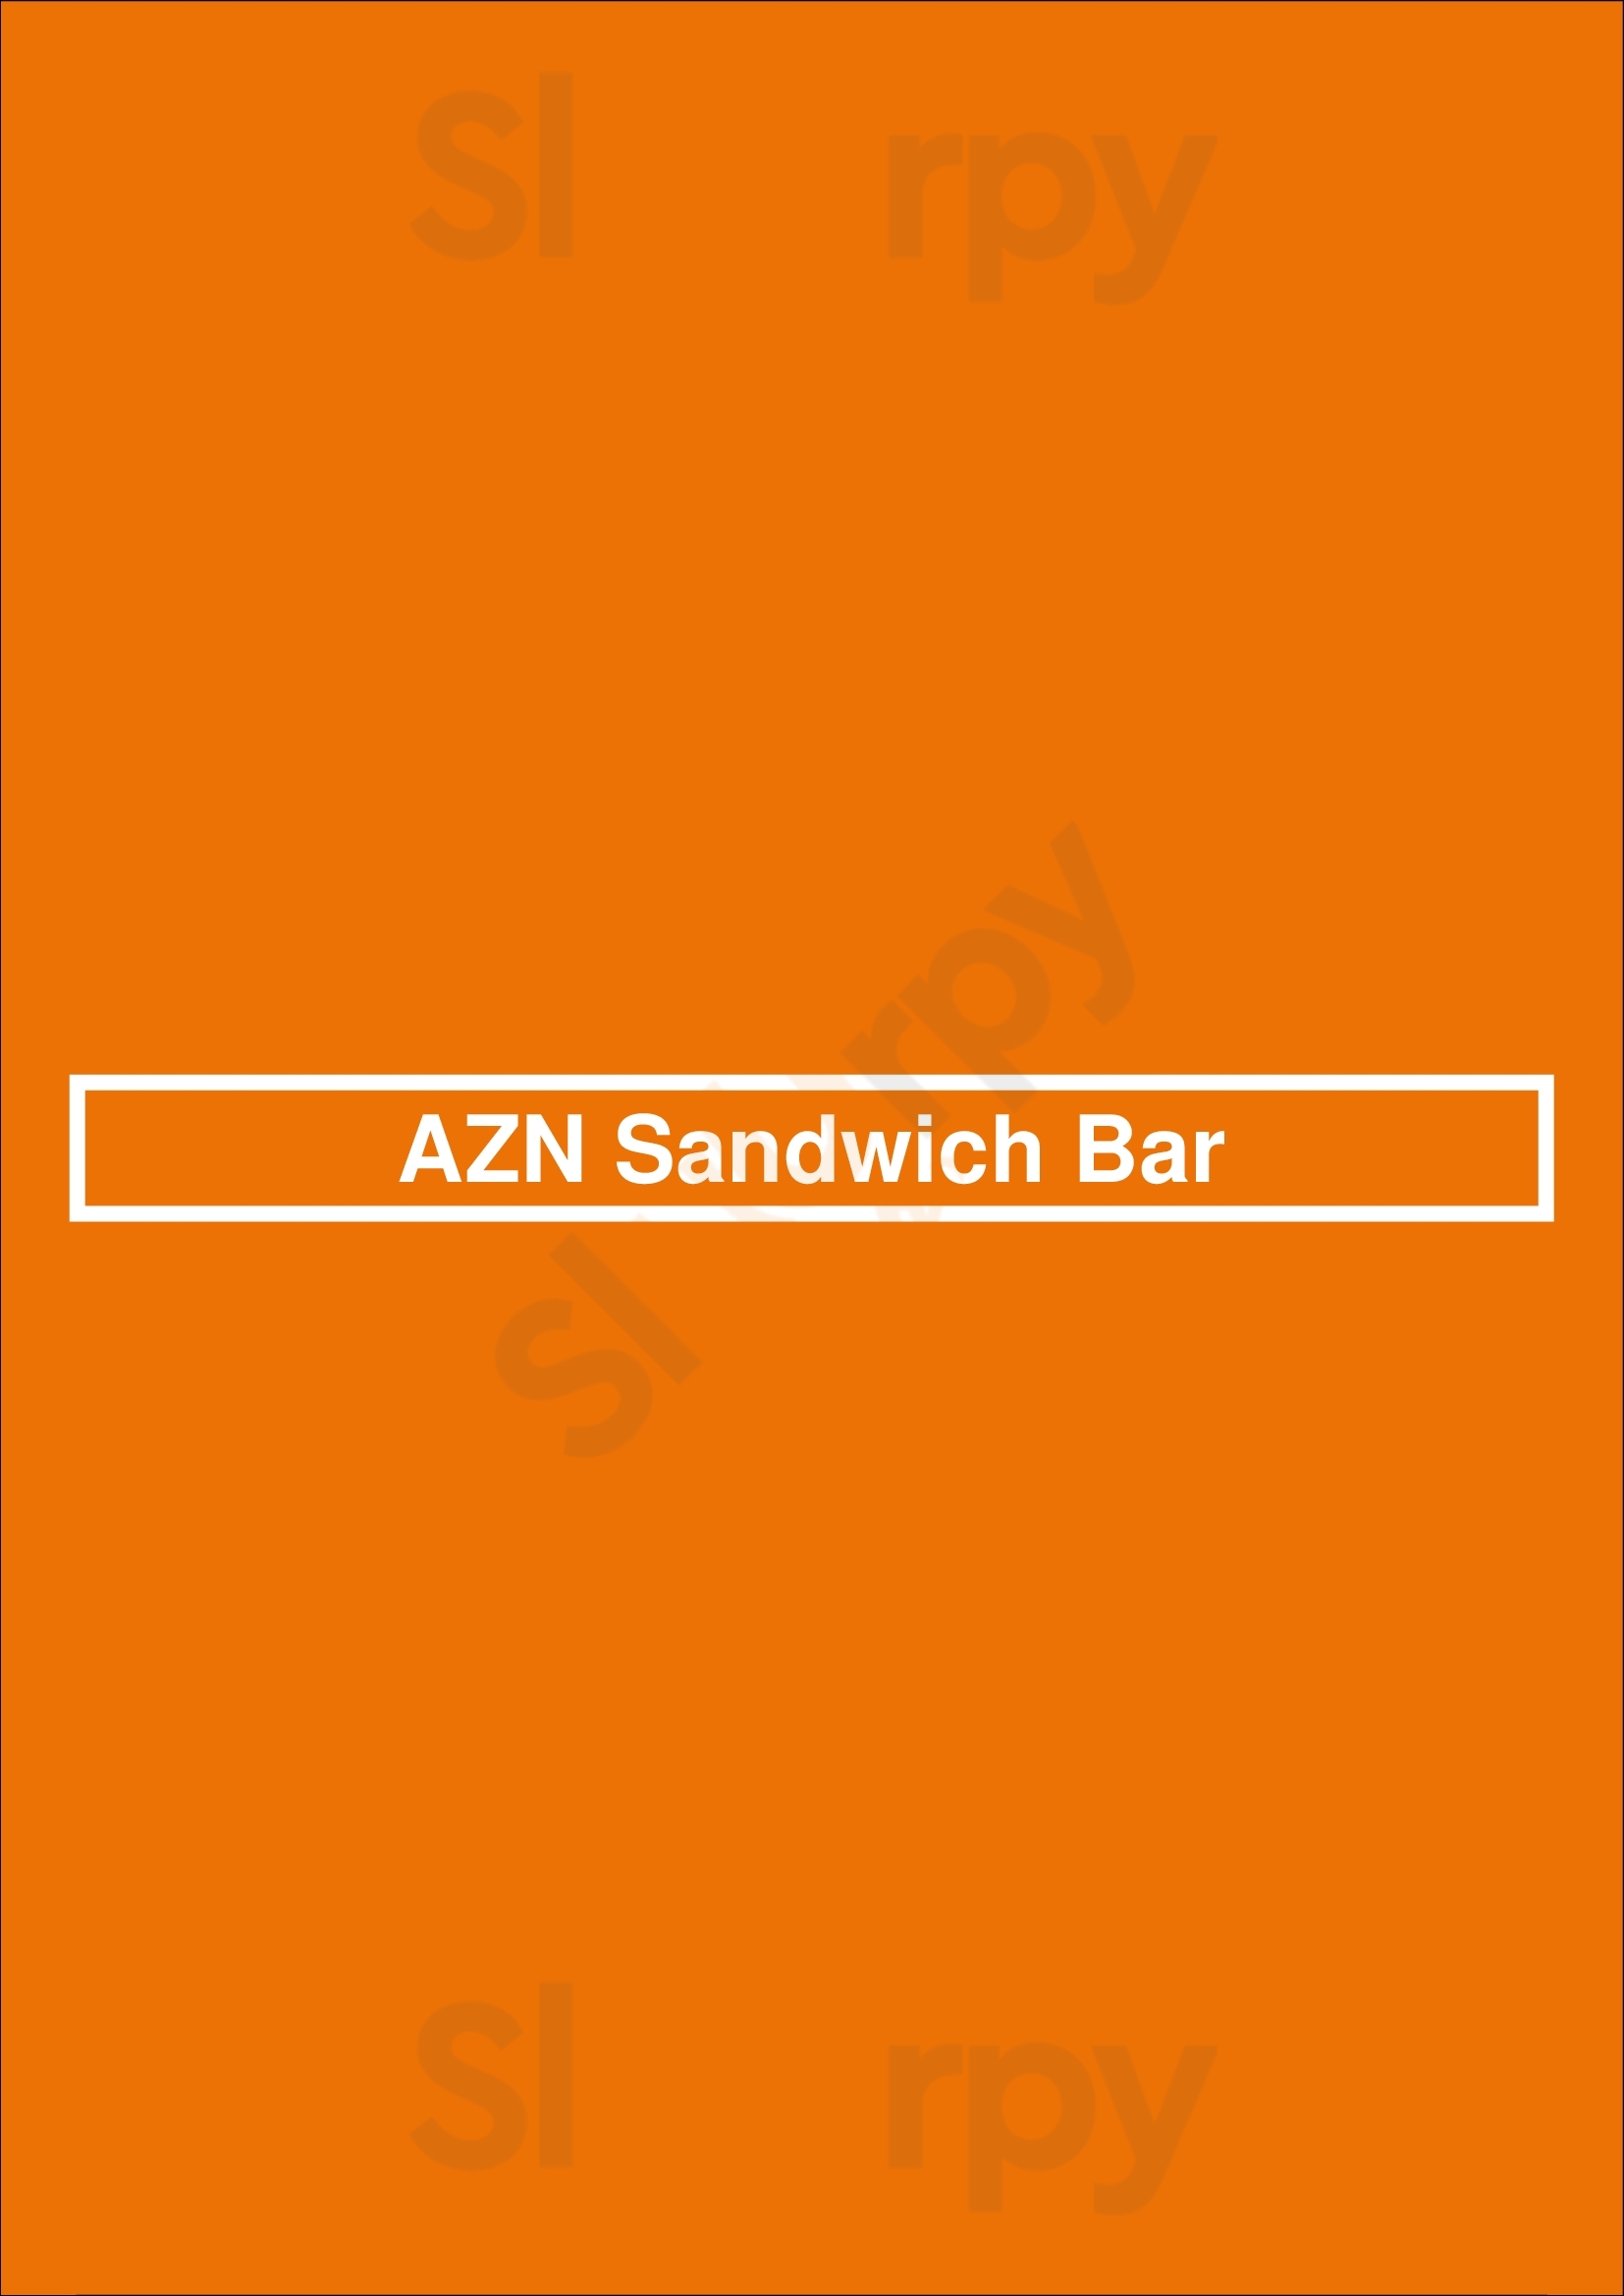 Azn Sandwich Bar Fayetteville Menu - 1